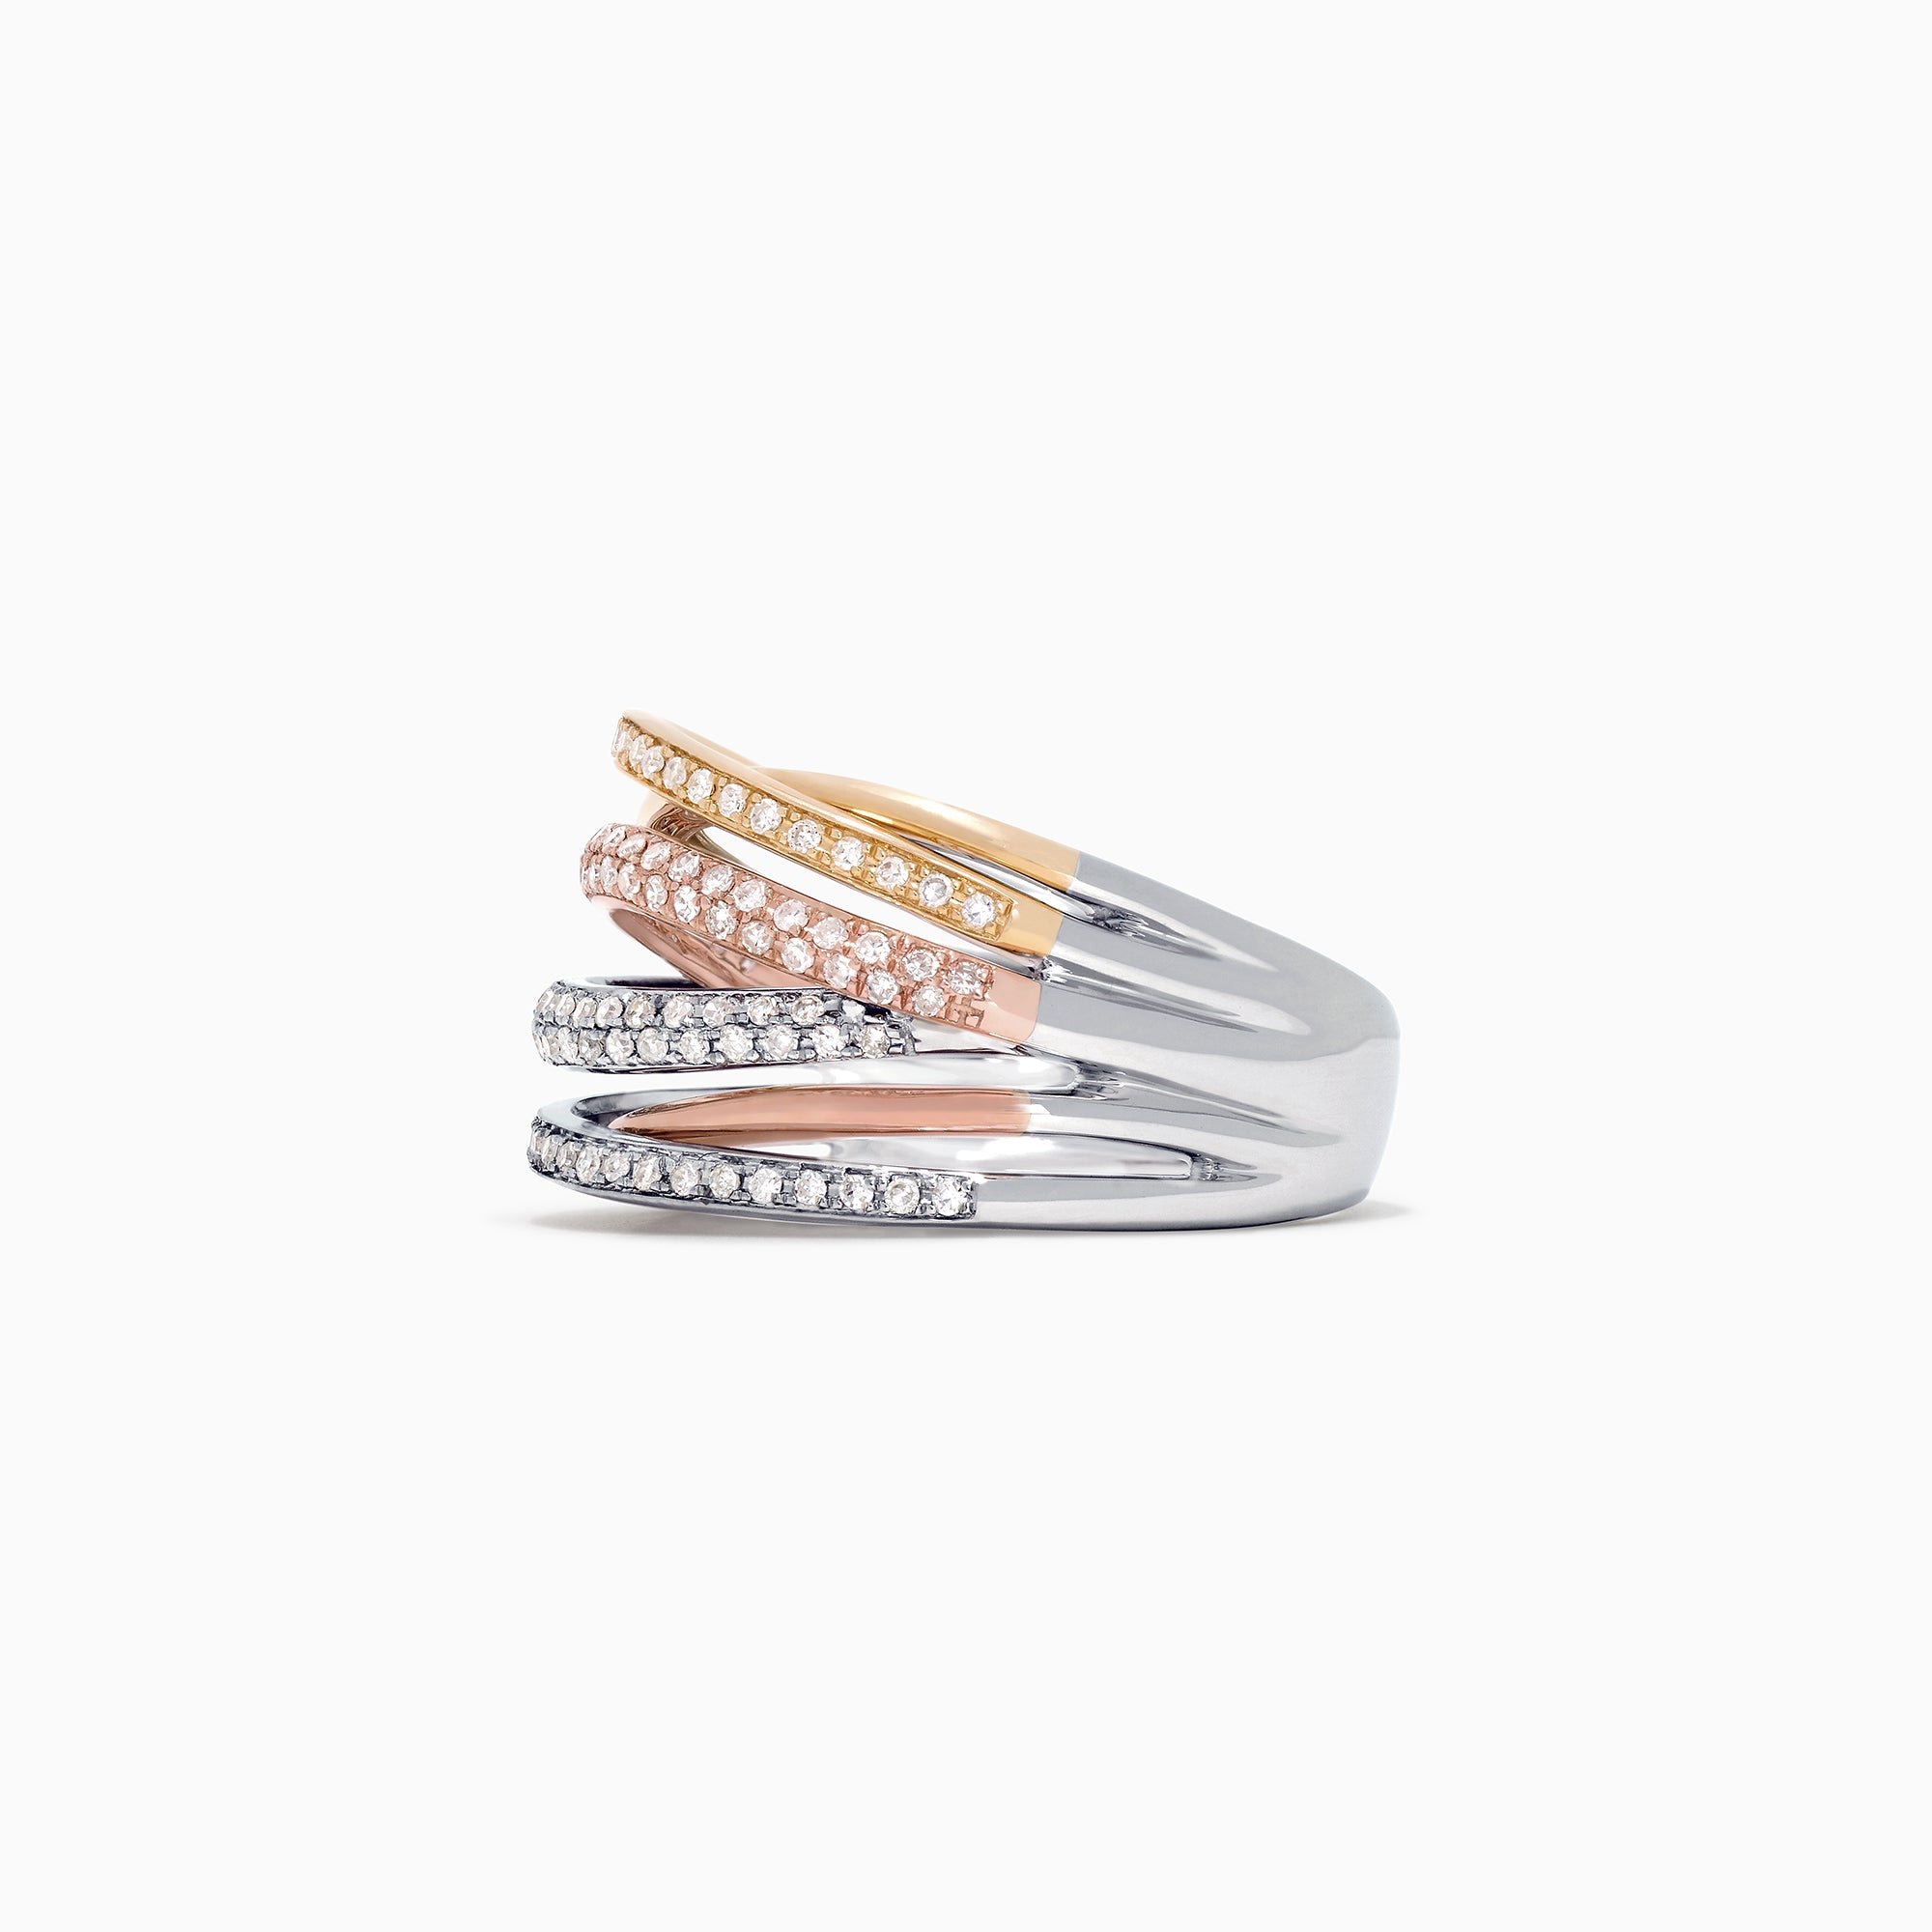 Effy Trio 14K Tri-Color Gold Diamond Ring, 0.54 TCW